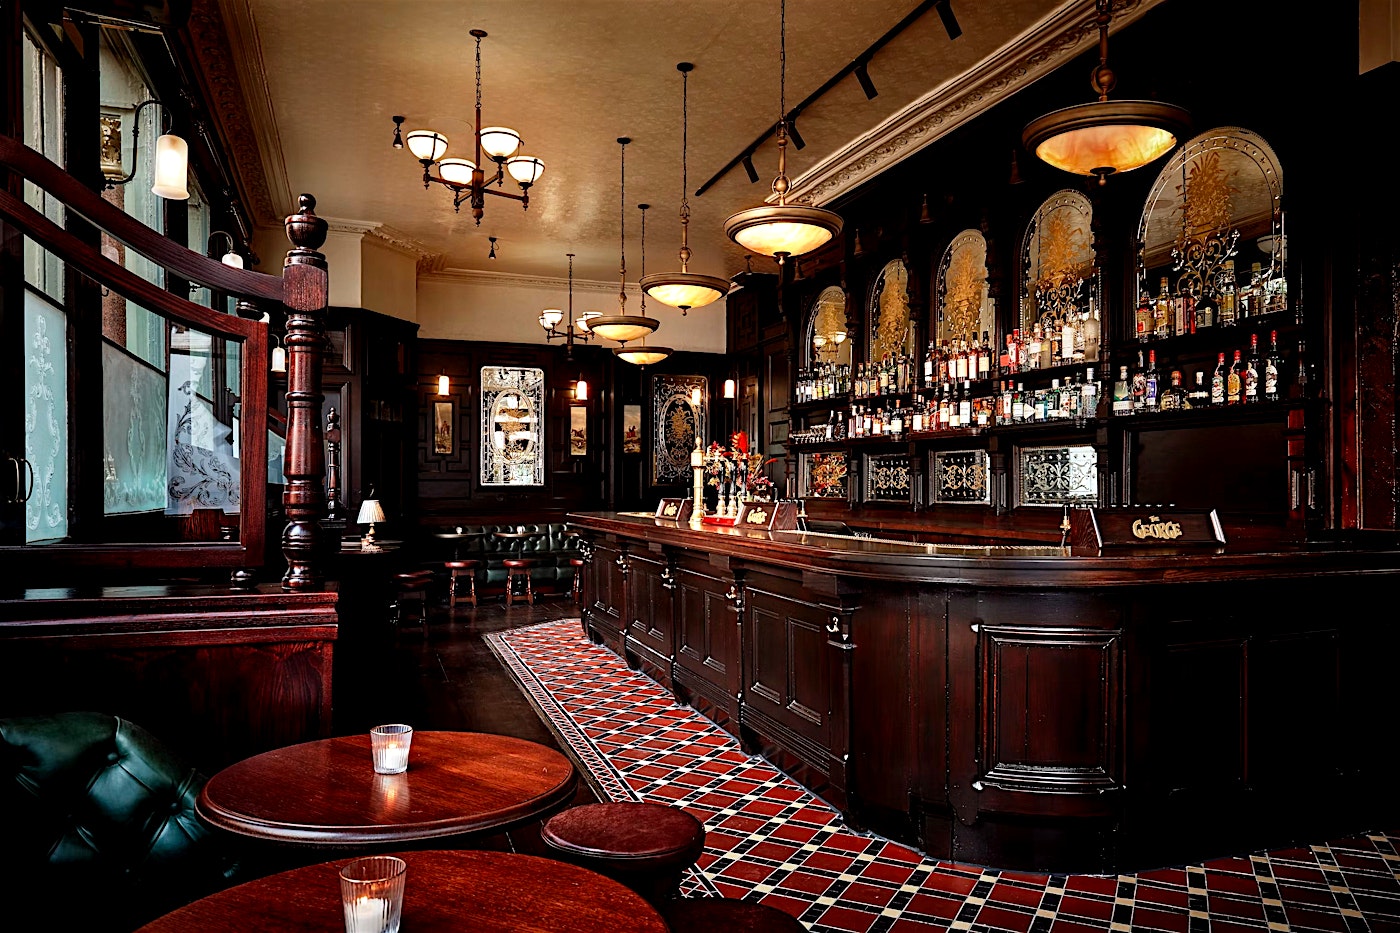 The george london pub